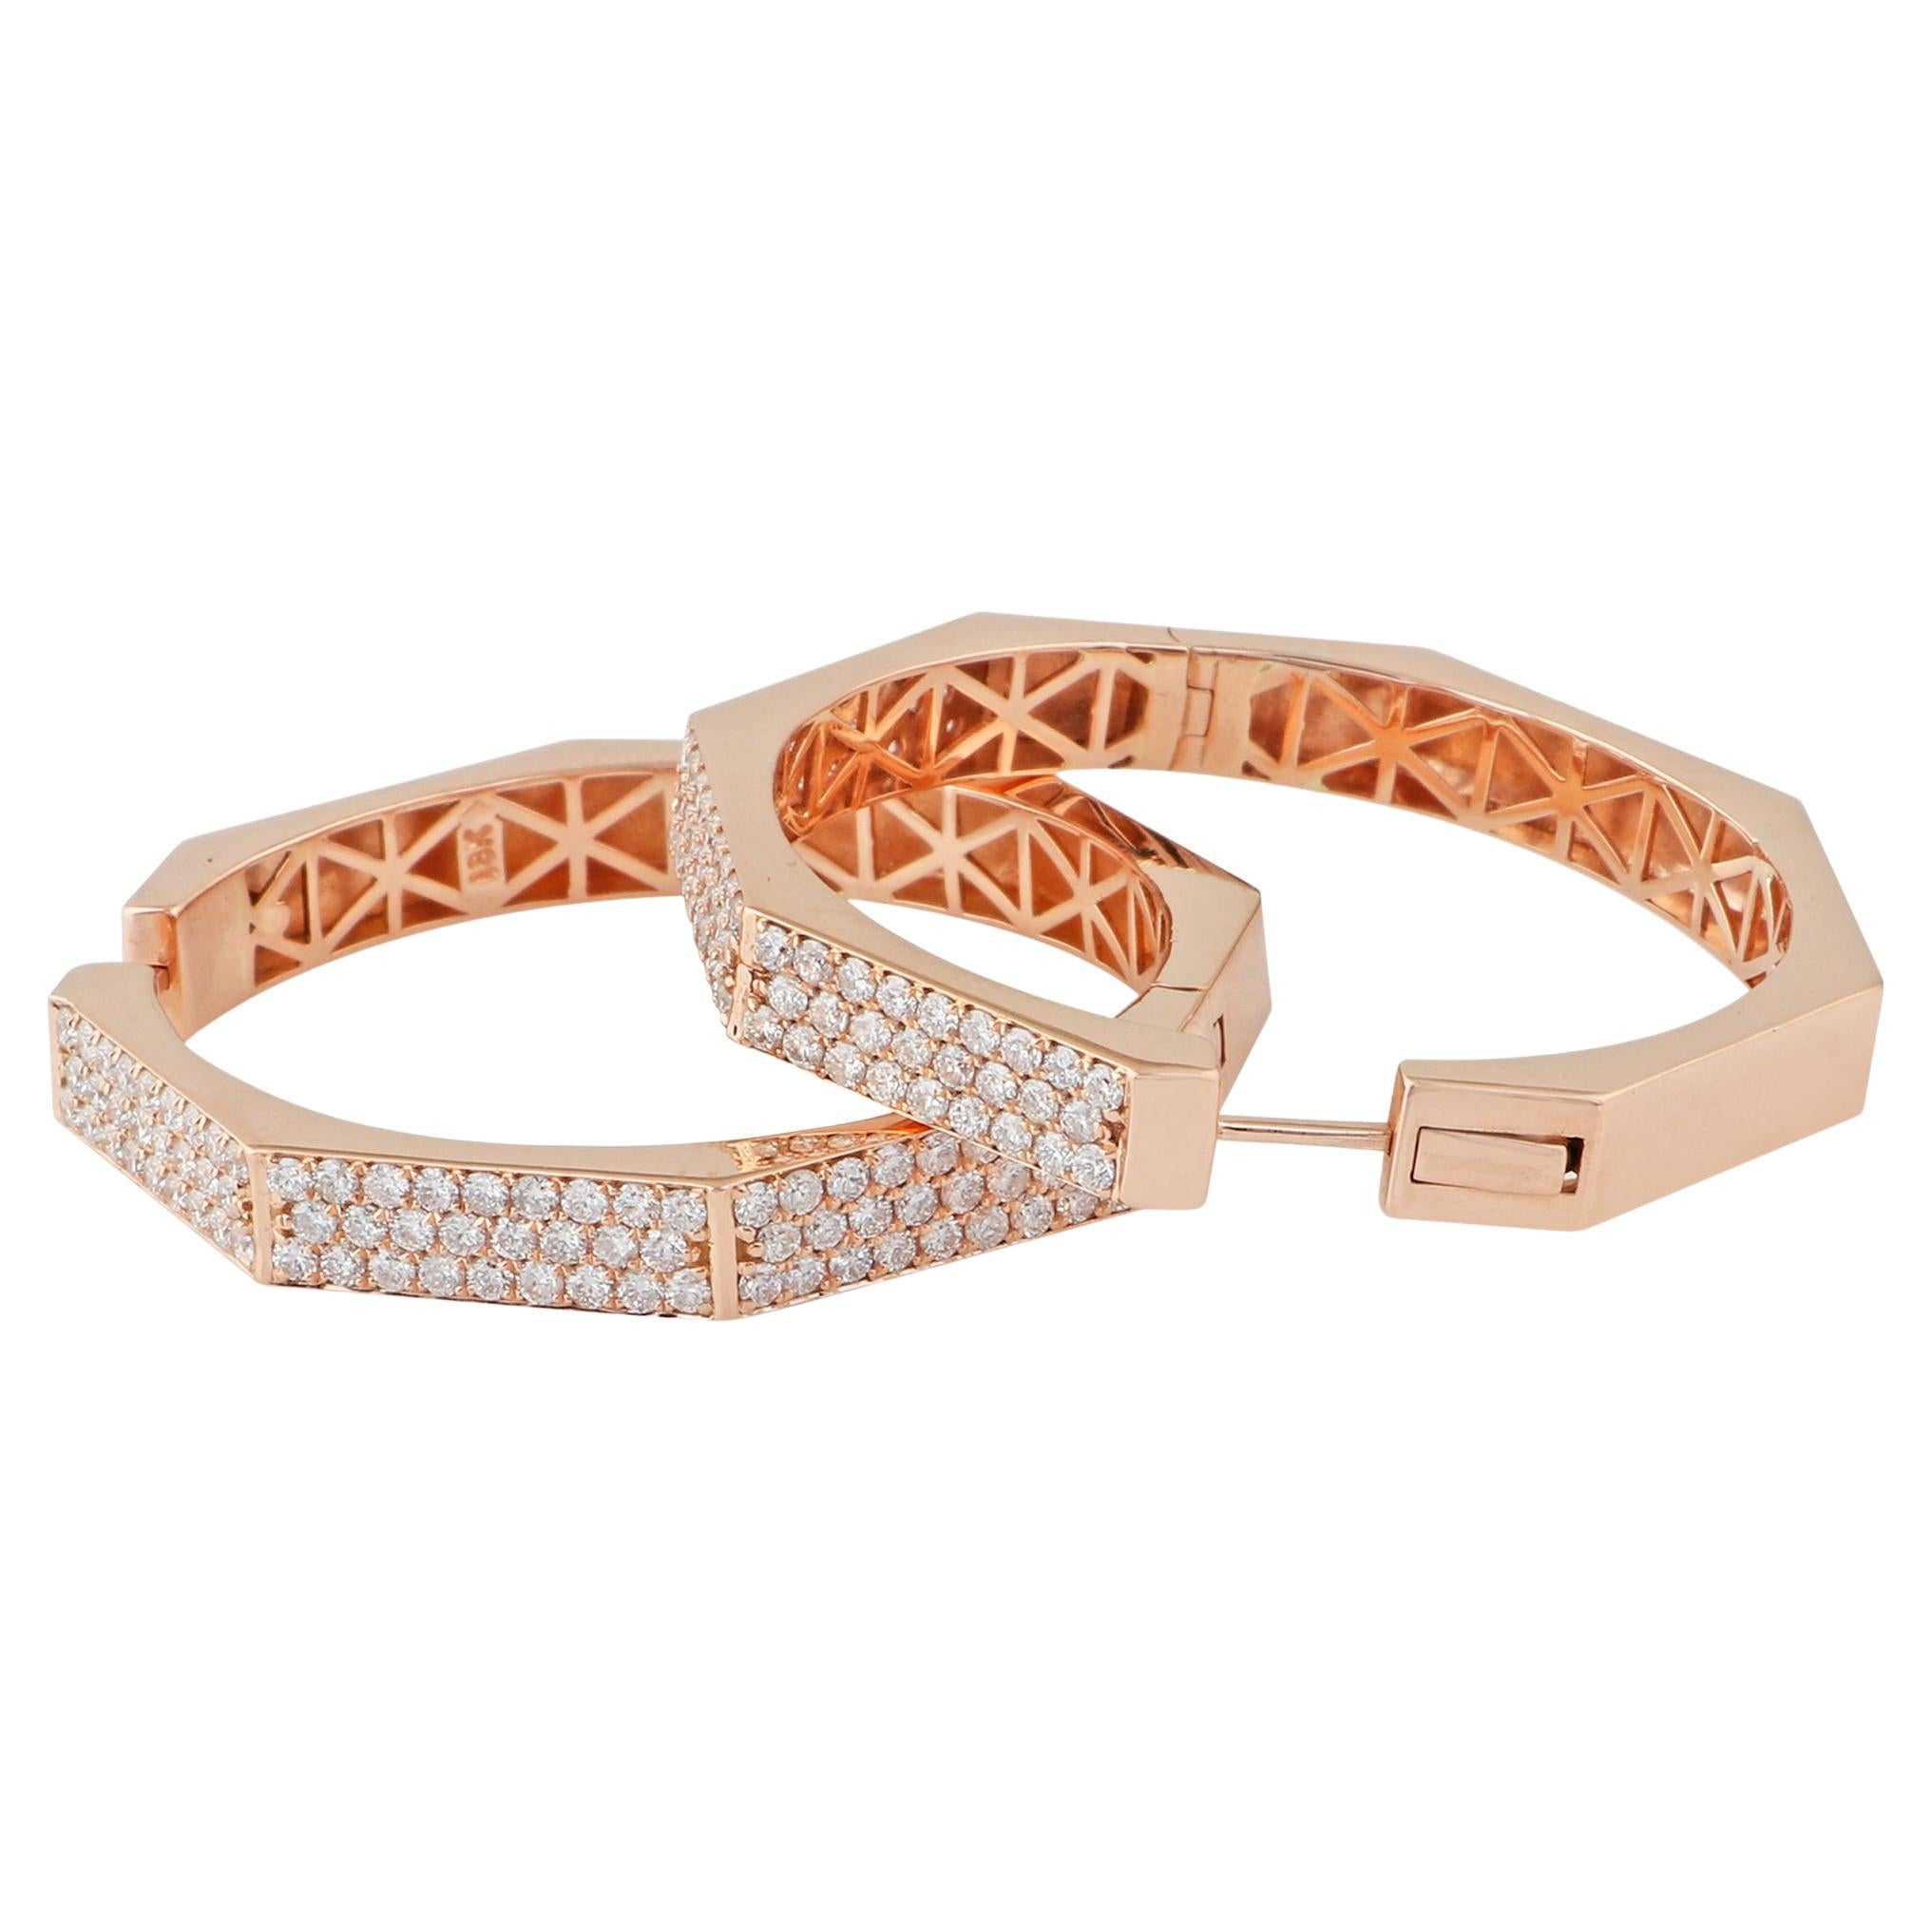 2.80 Carat SI Clarity HI Color Diamond Hoop Earrings 18 Karat Rose Gold Jewelry